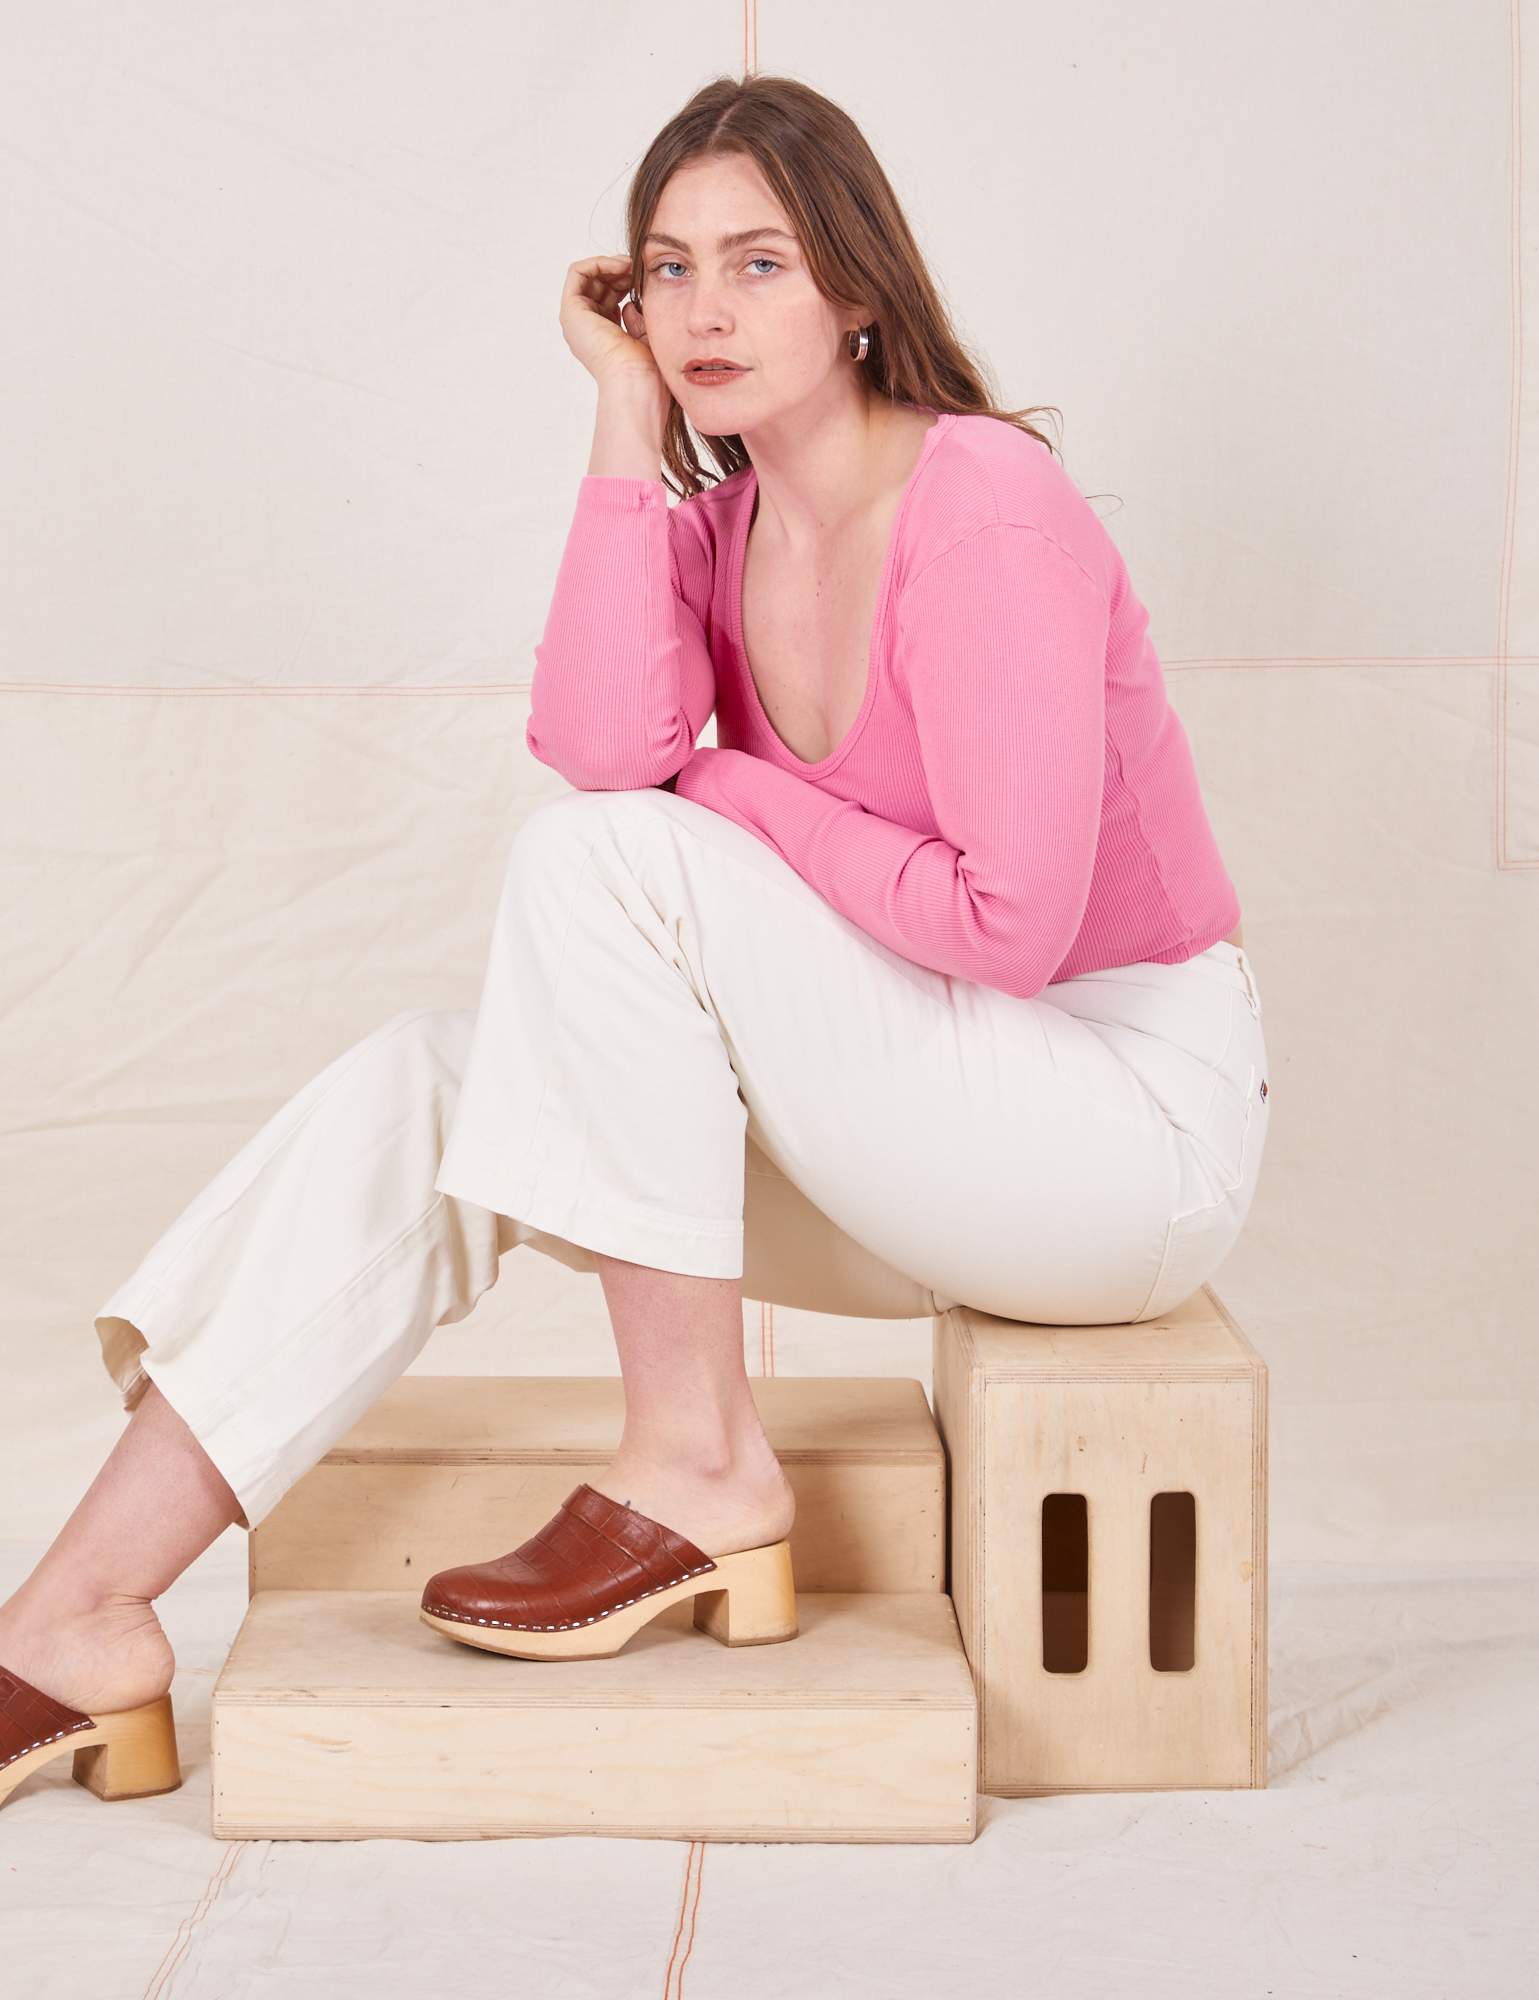  Long Sleeve V-Neck Tee in Bubblegum on Allison wearing vintage tee off-white Western Pants sitting on wooden crate